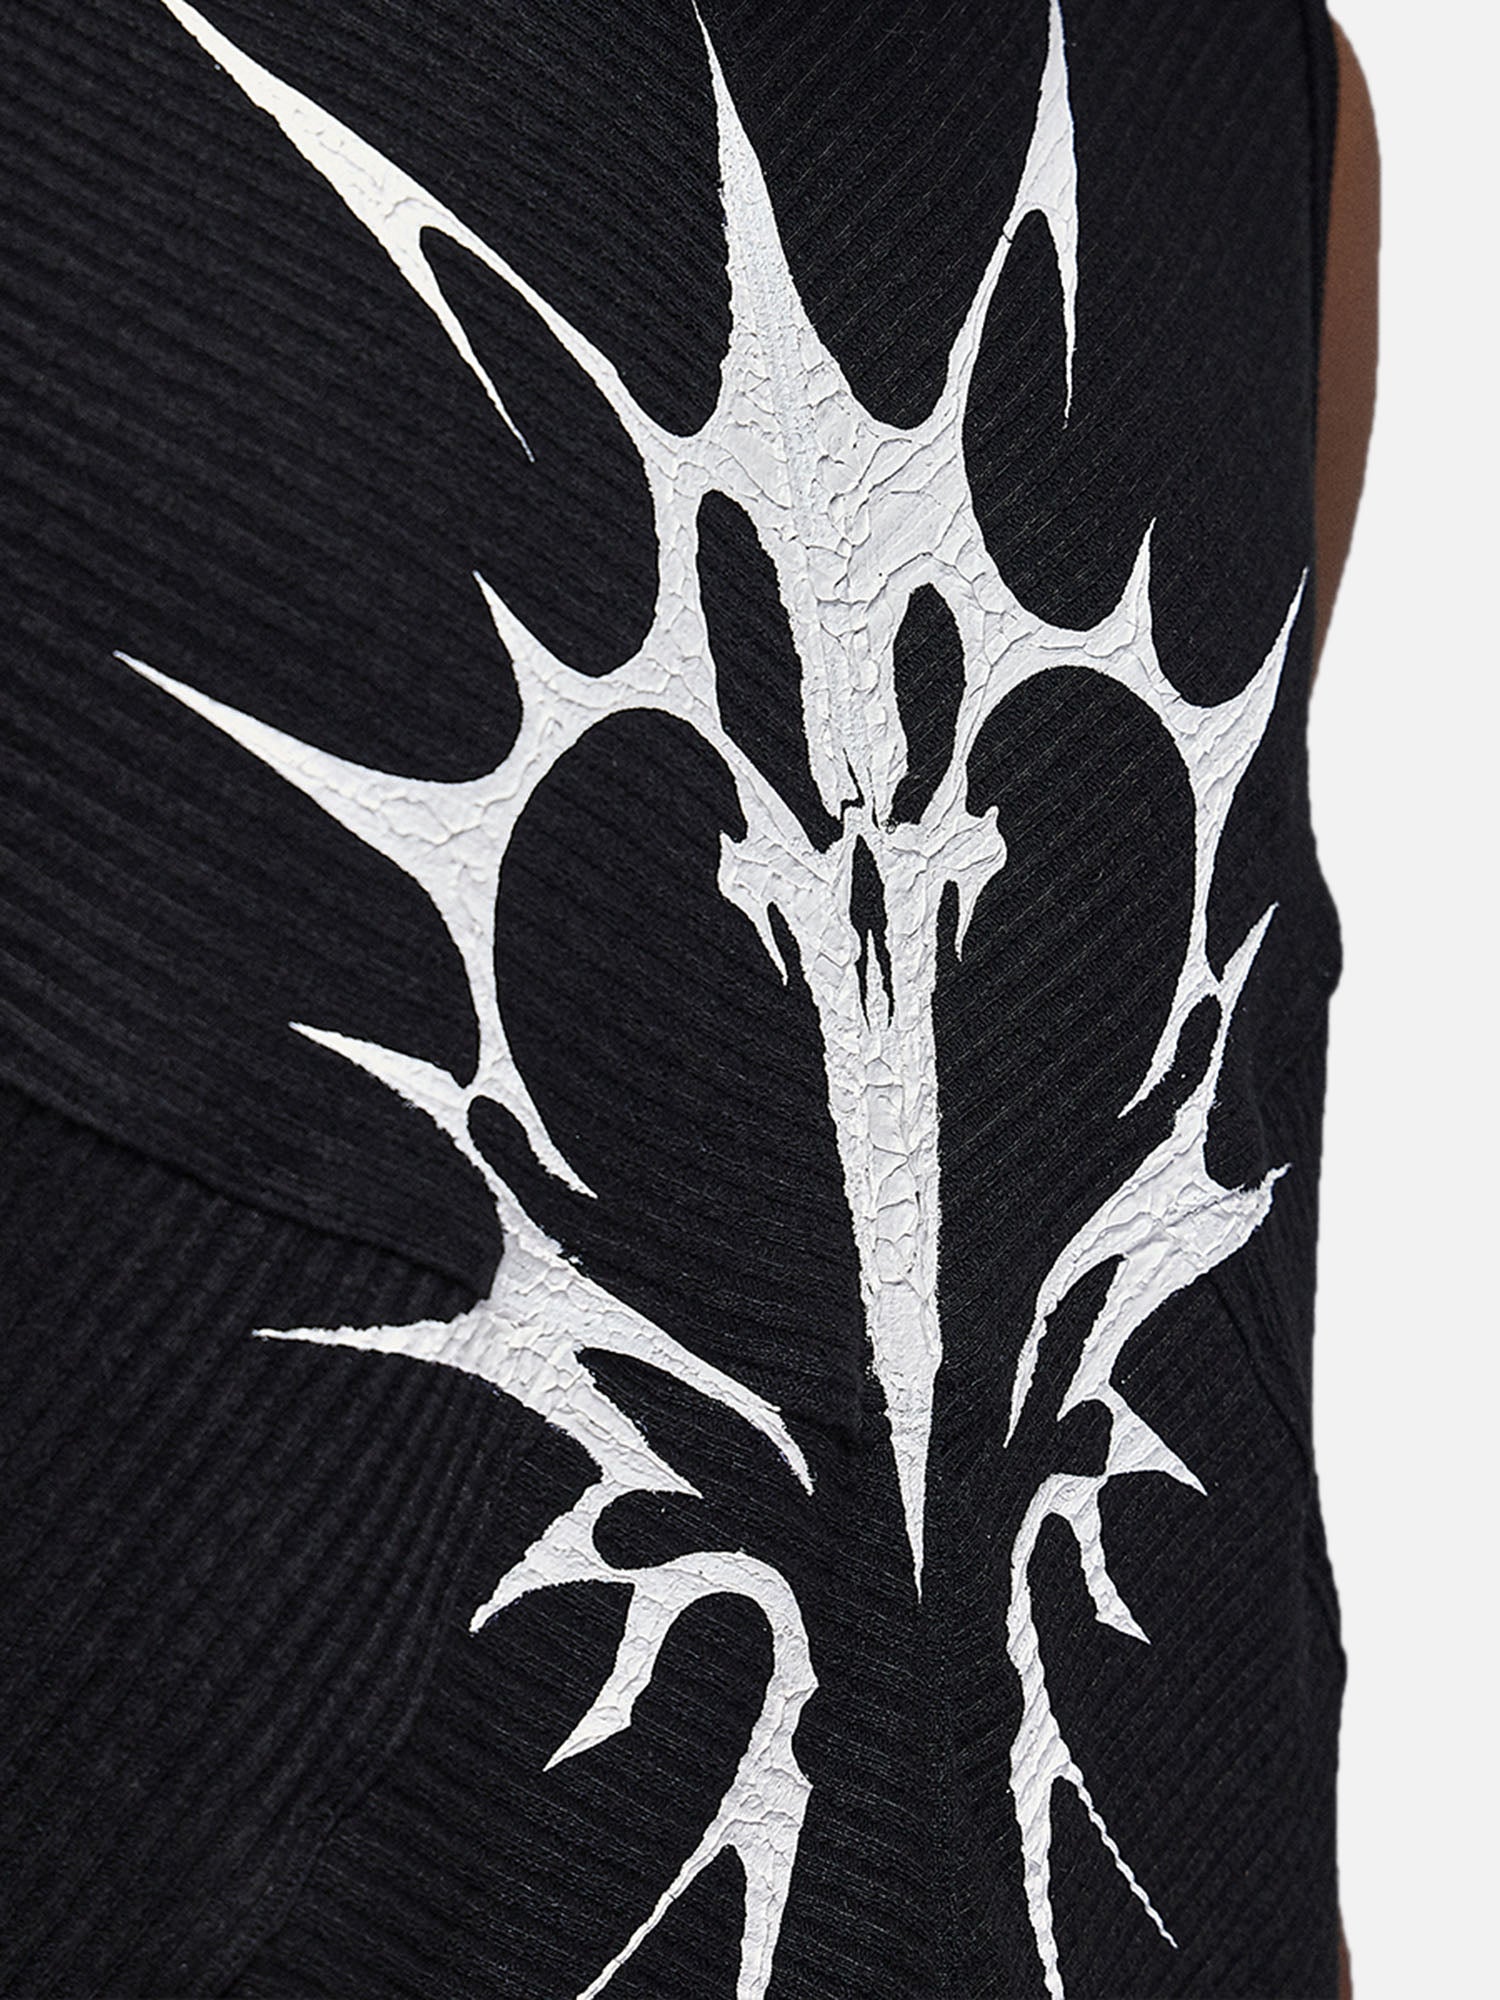 American Street Hip-hop Tight-fitting Stretch Black Printed Pit Vest